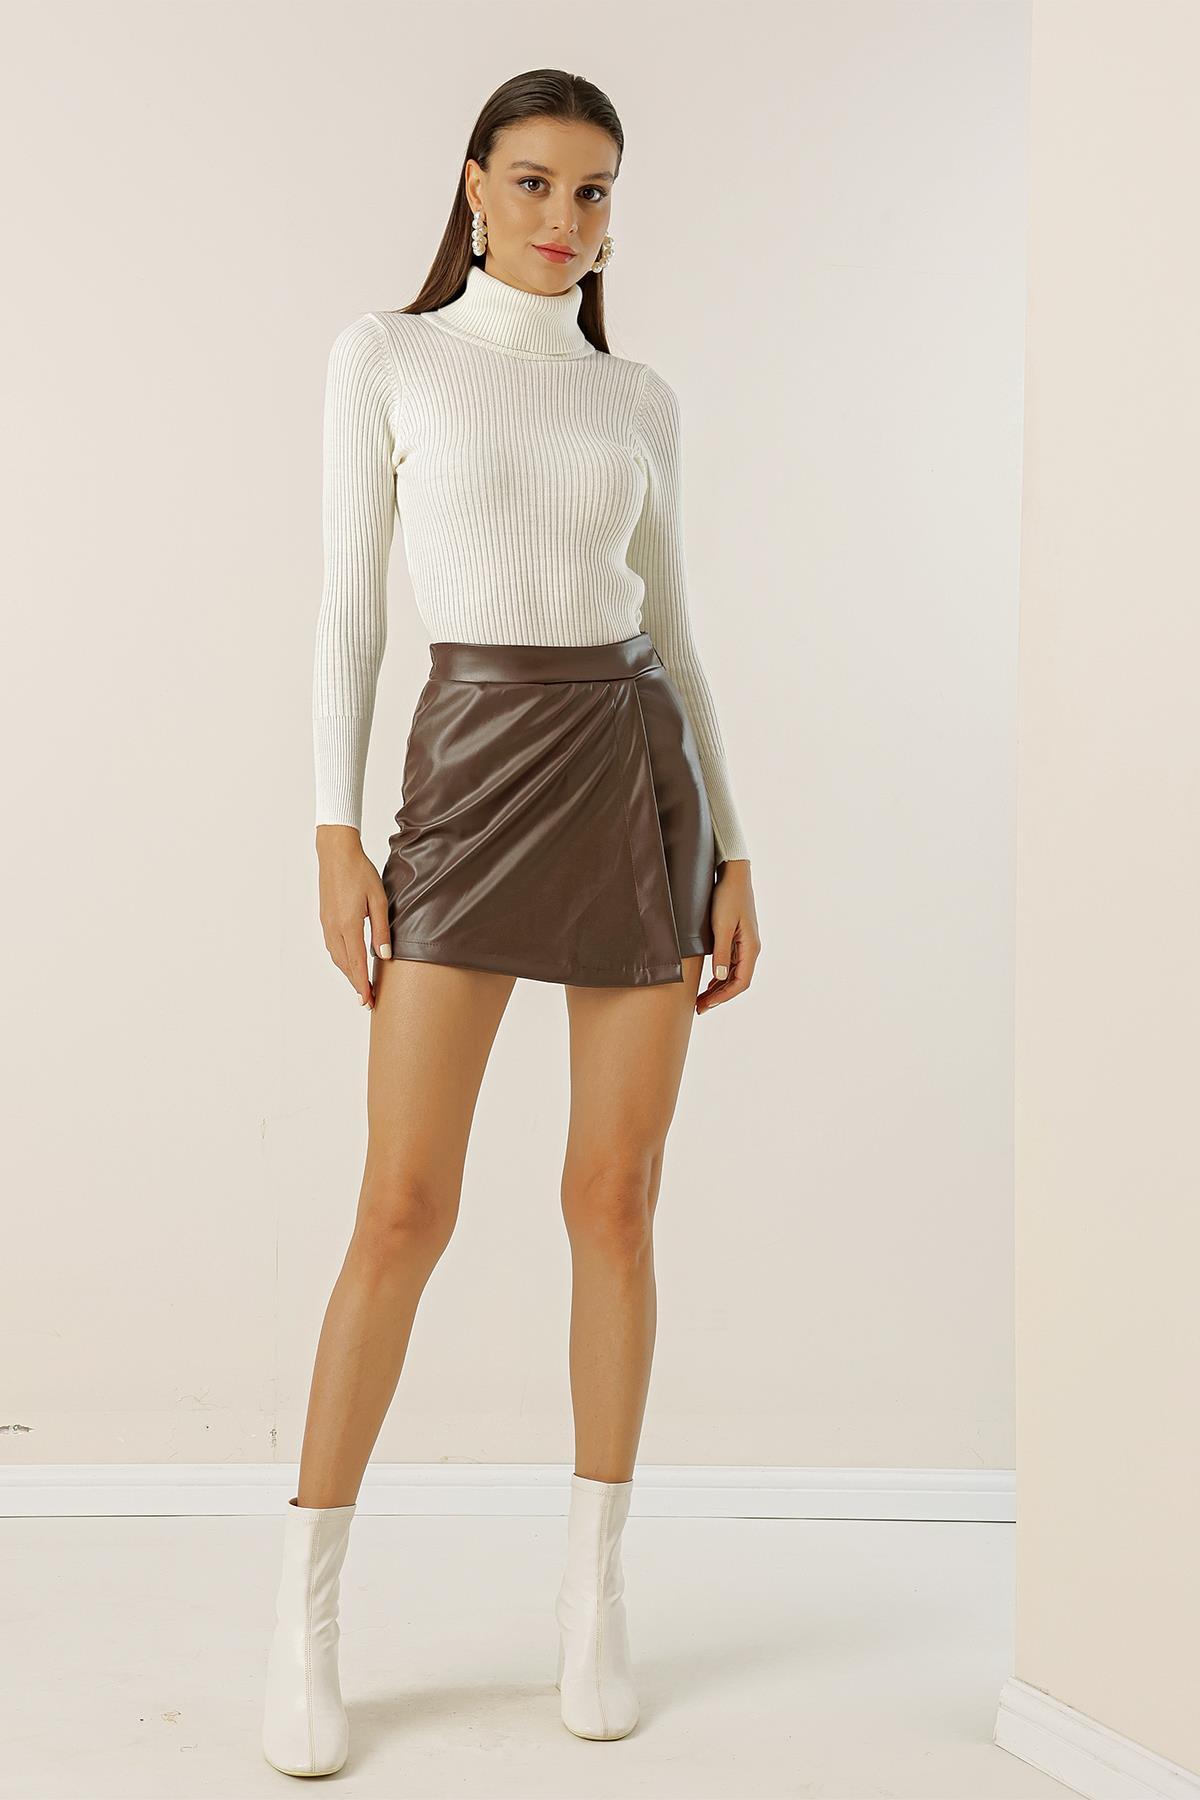 Levně By Saygı Capped Leather Shorts Skirt with Elastic Waist